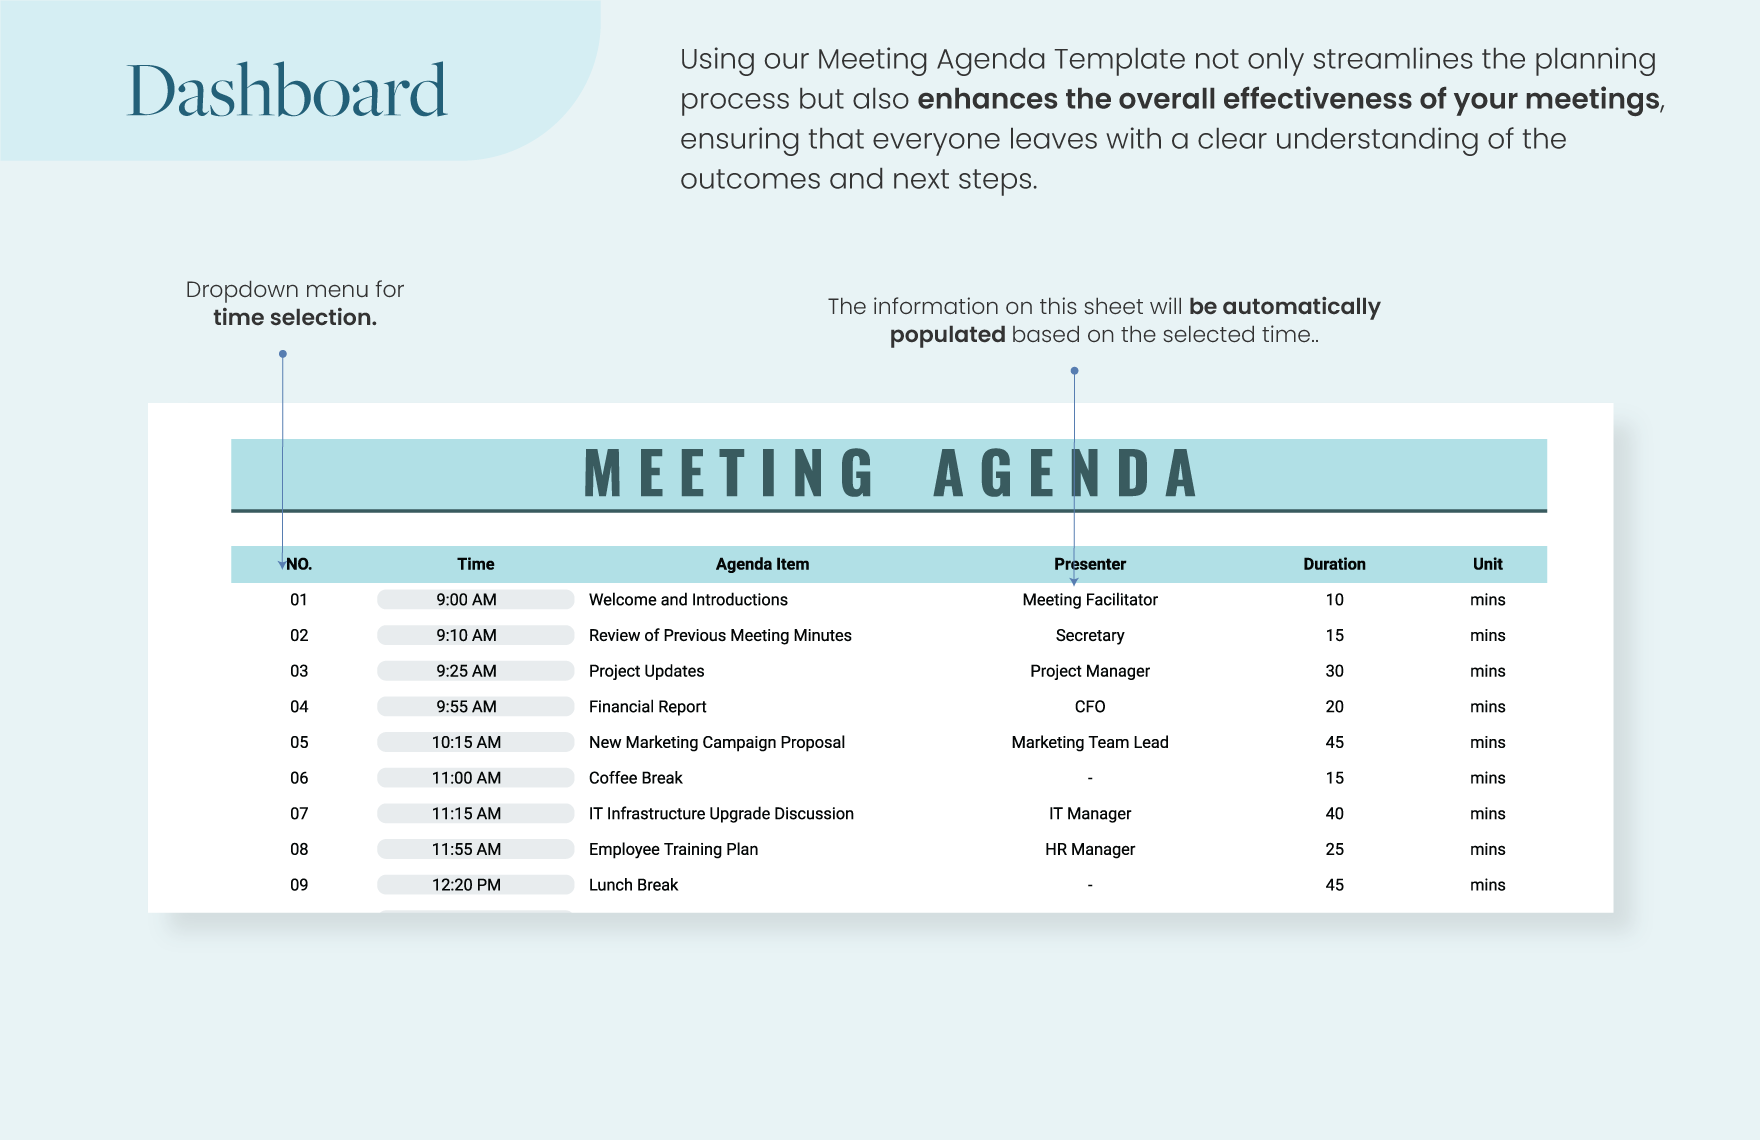 Meeting Agenda Template